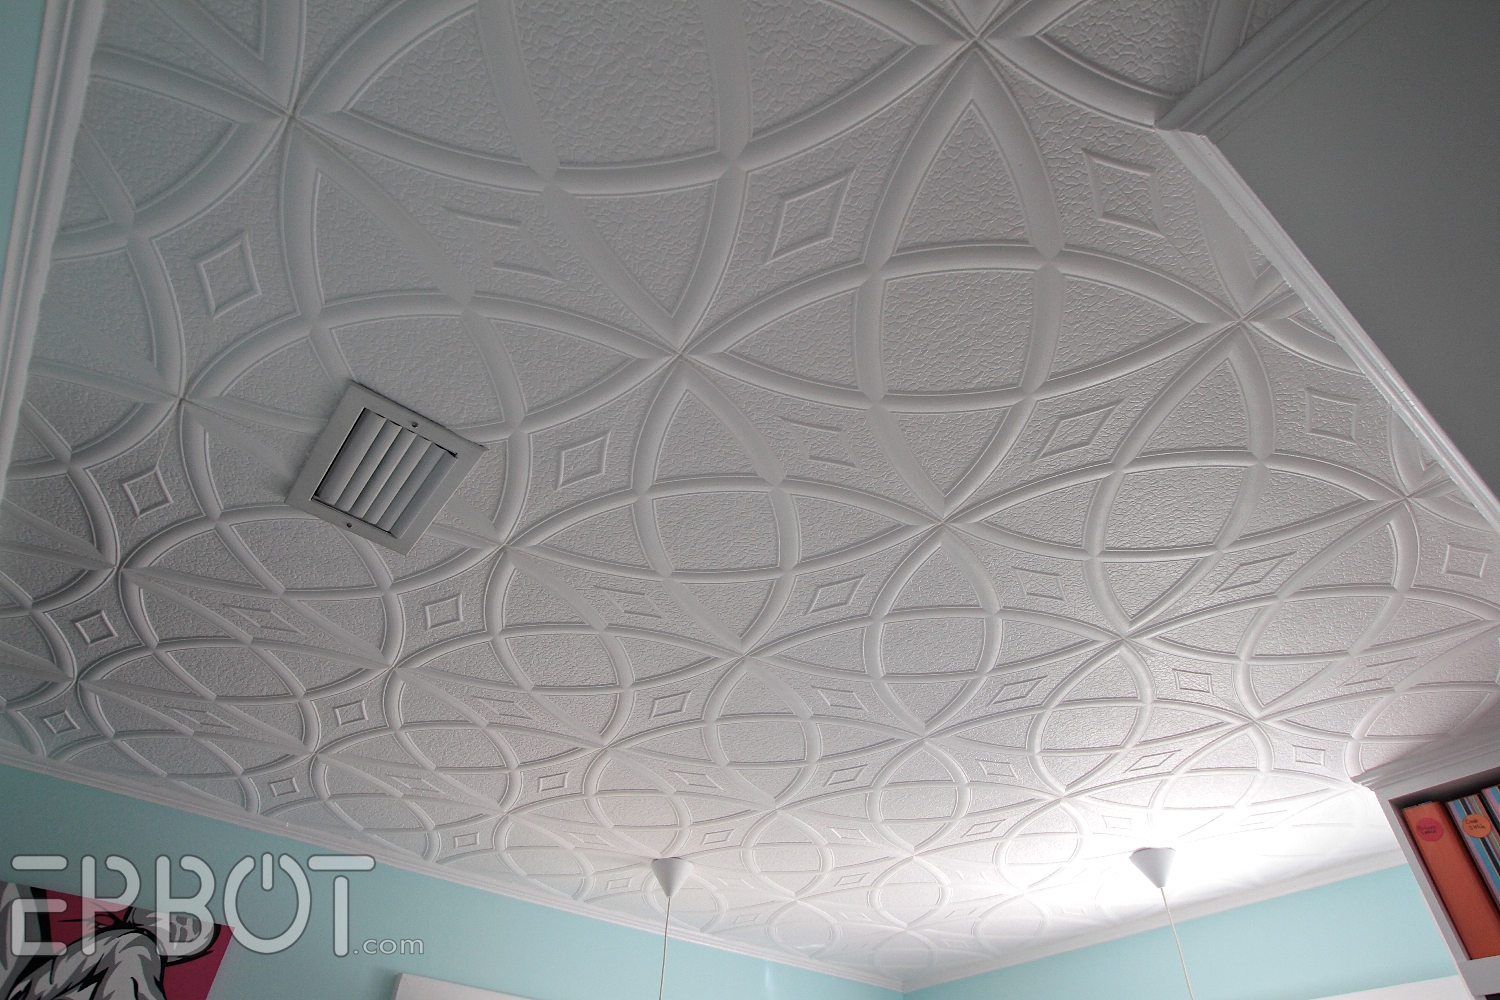 Best Way To Cut Plastic Ceiling Tiles Best Way To Cut Plastic Ceiling Tiles epbot diy faux tin tile ceiling 1500 X 1000